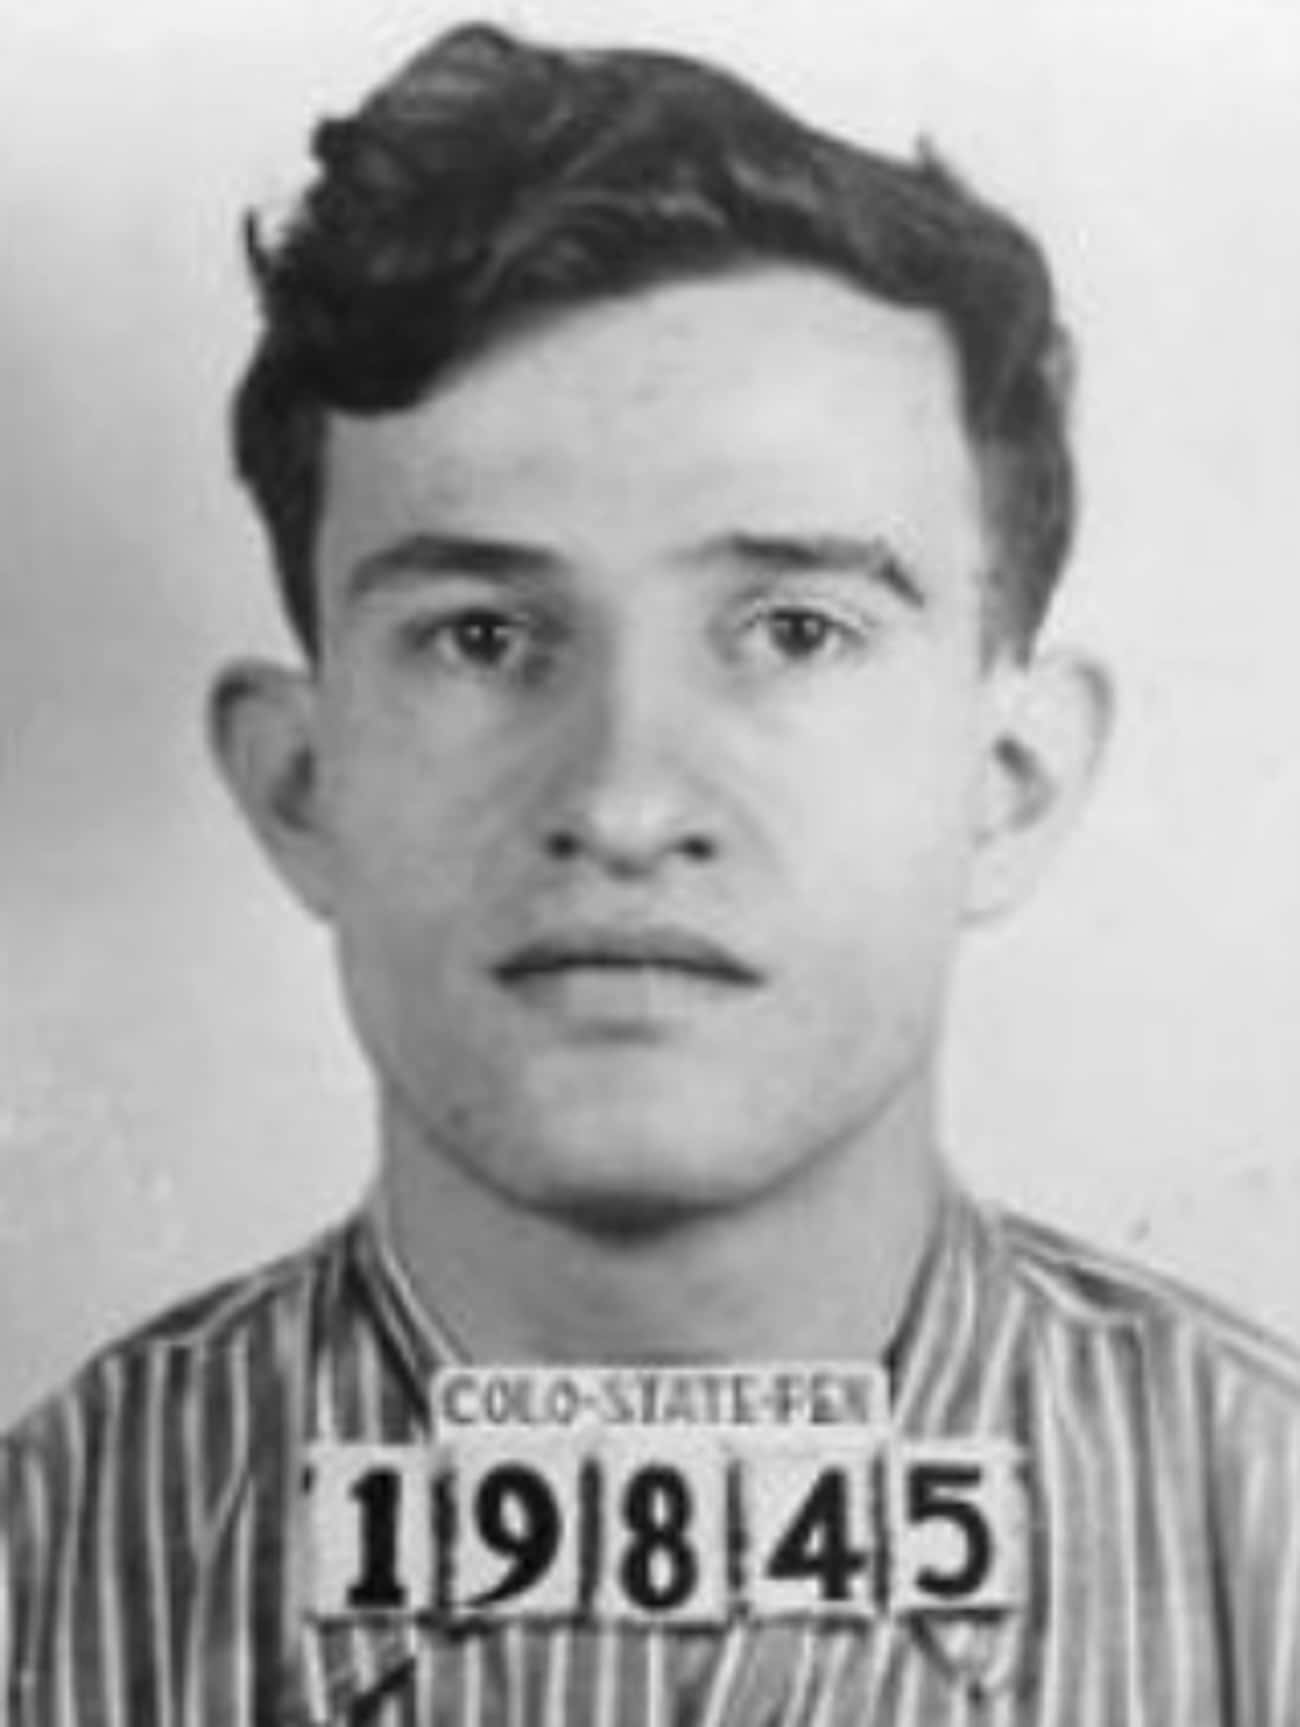 Joe Arridy, ‘The Happiest Man On Death Row,’ Had An IQ Of 46